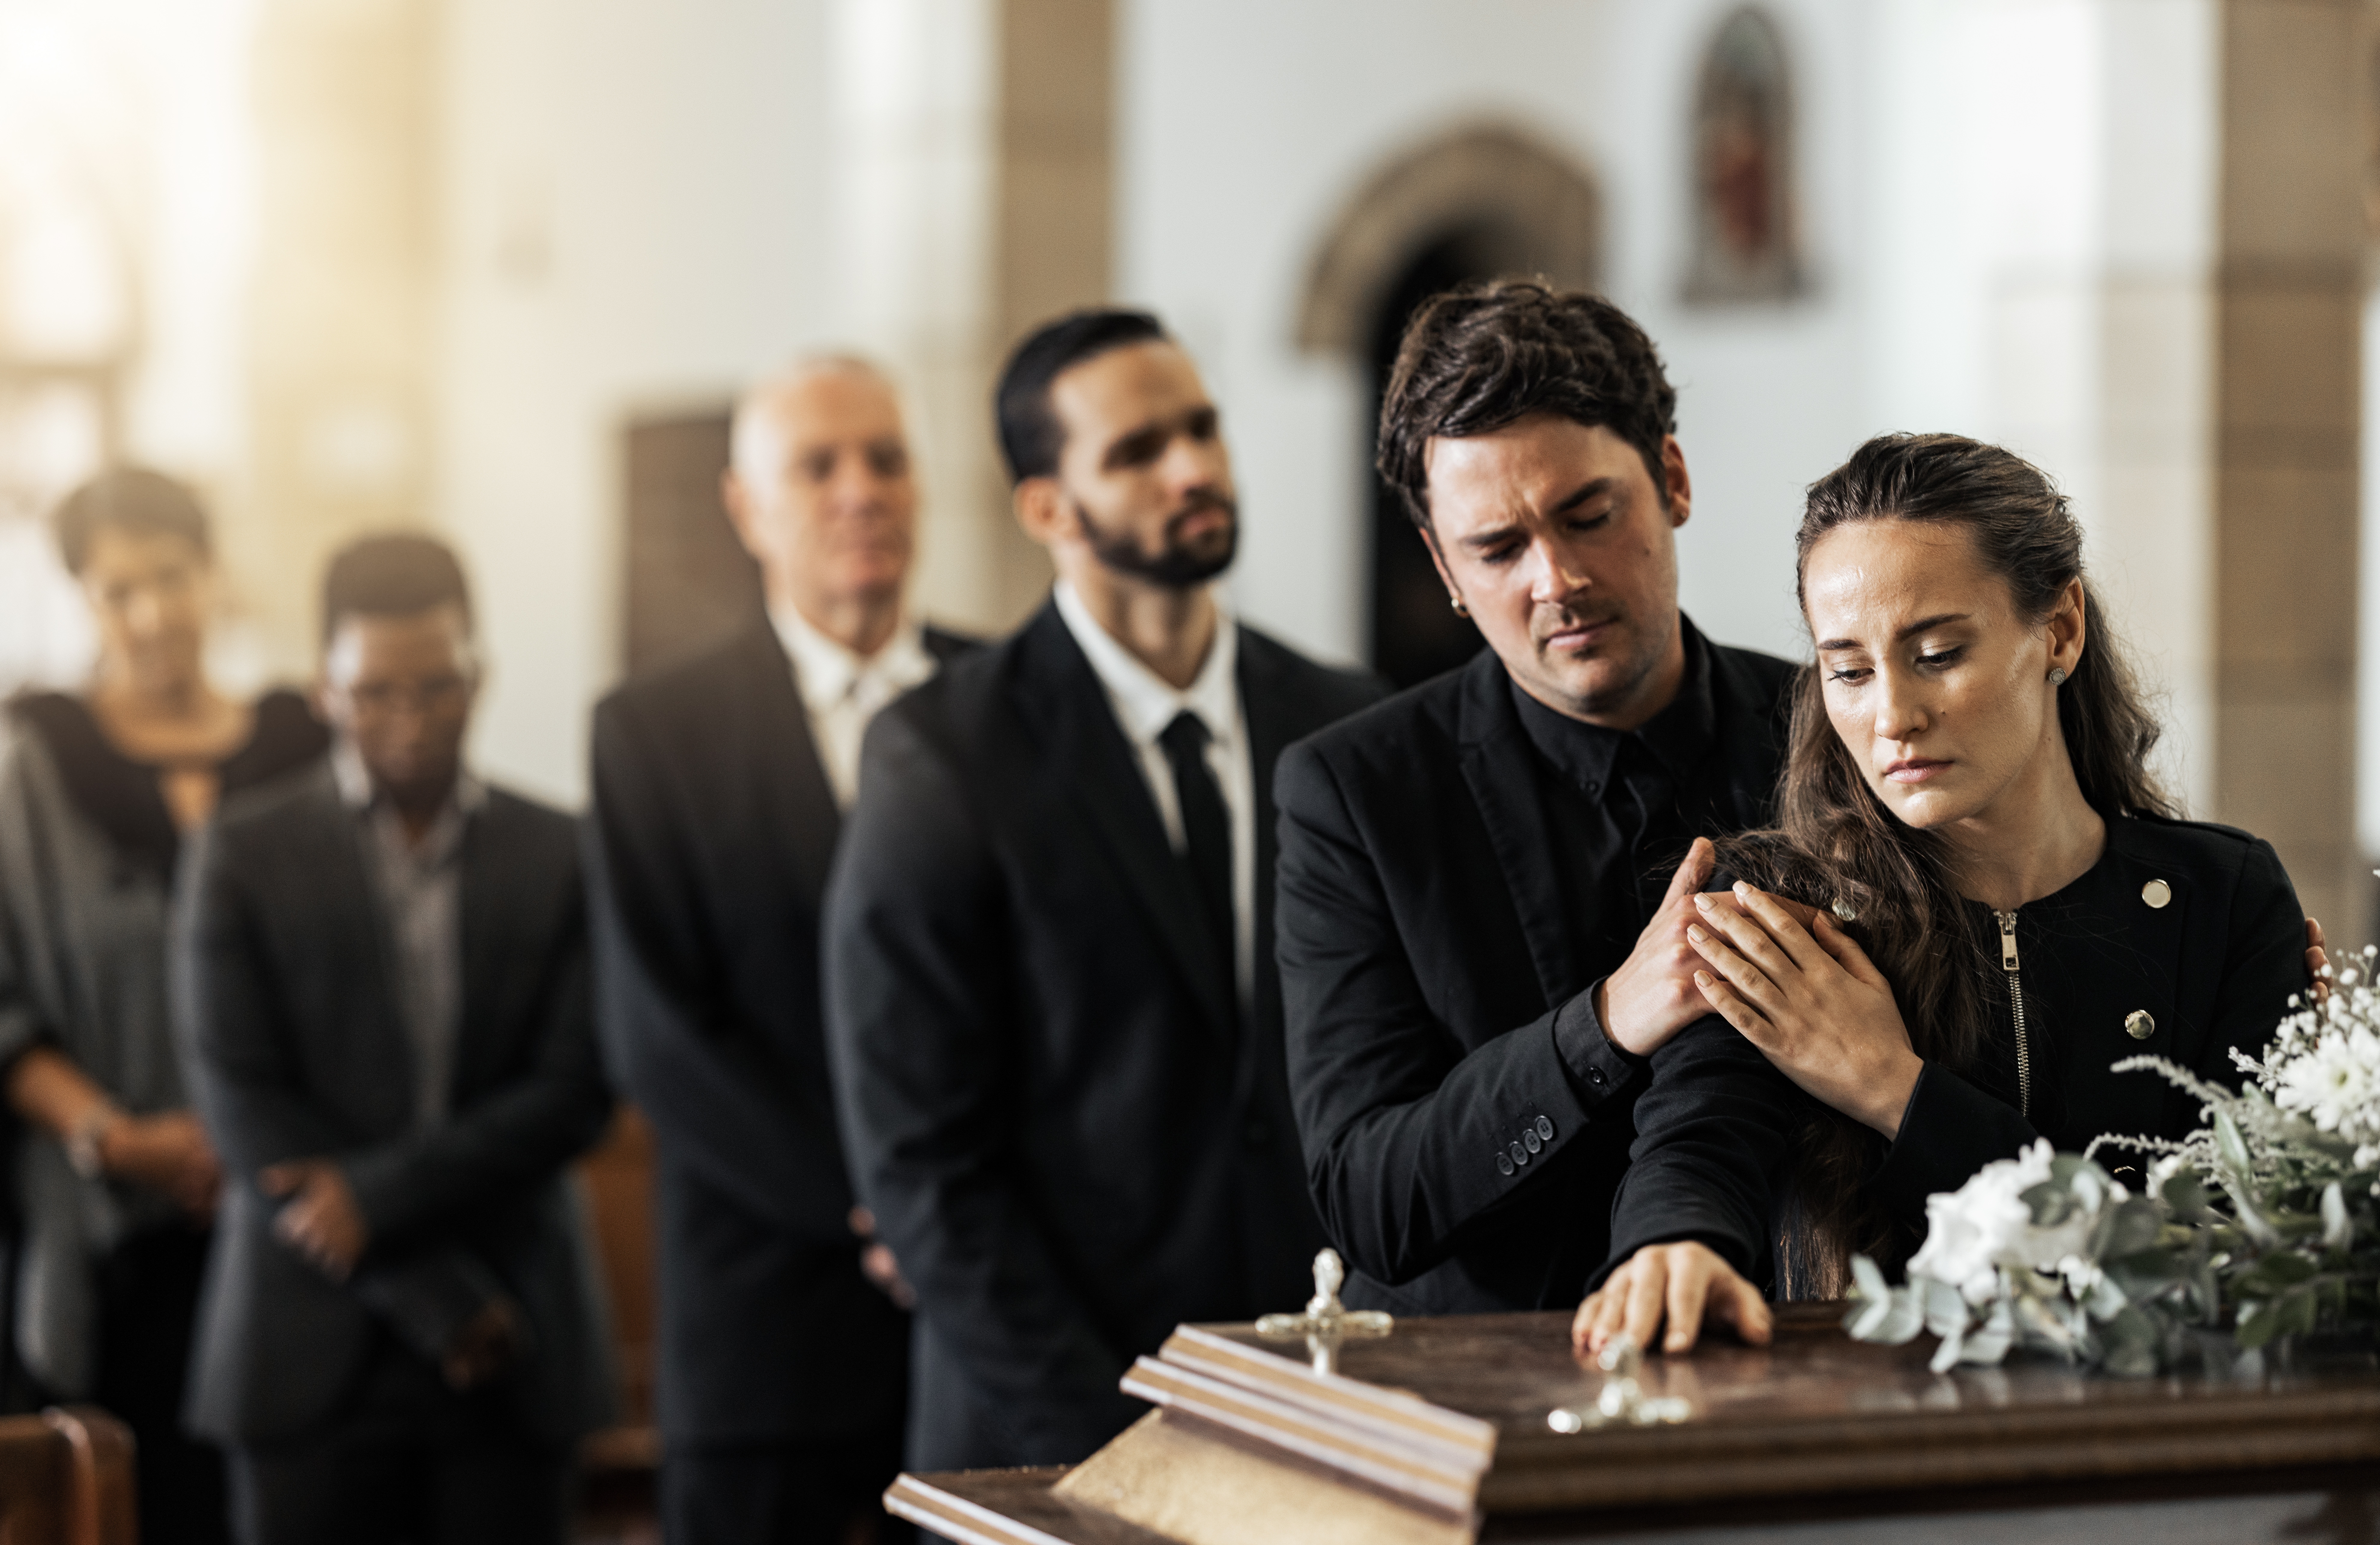 People standing near a coffin | Source: Shutterstock